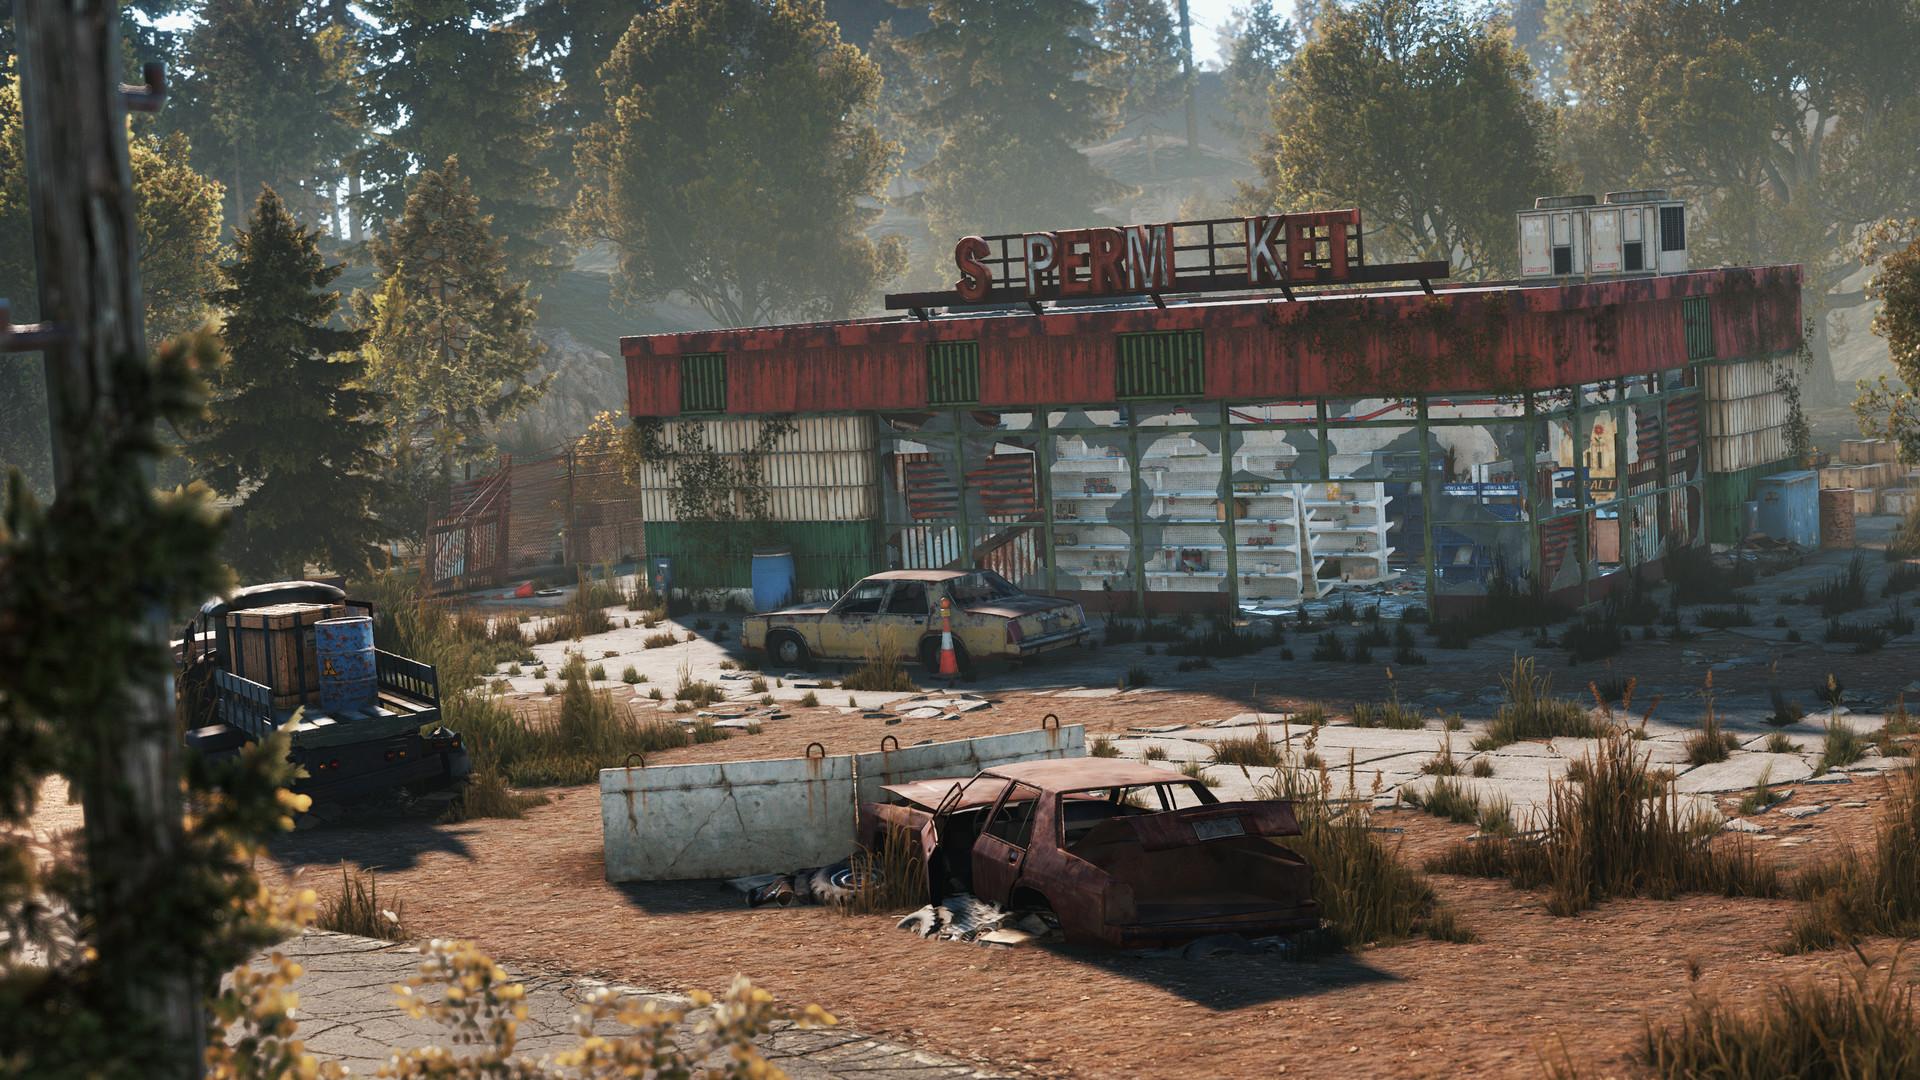 Screenshot №25 from game Rust